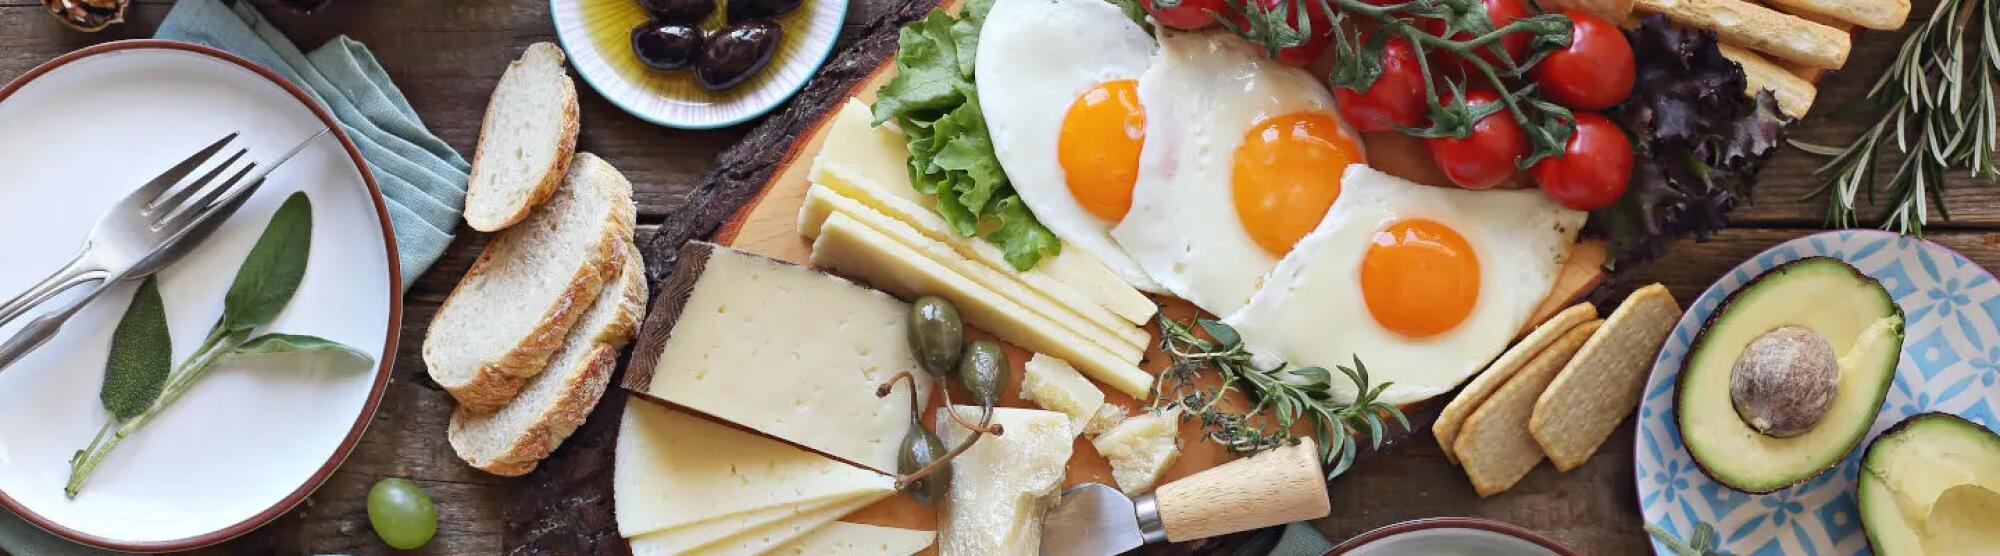 LA02_idees-recettes-brunch-fromage